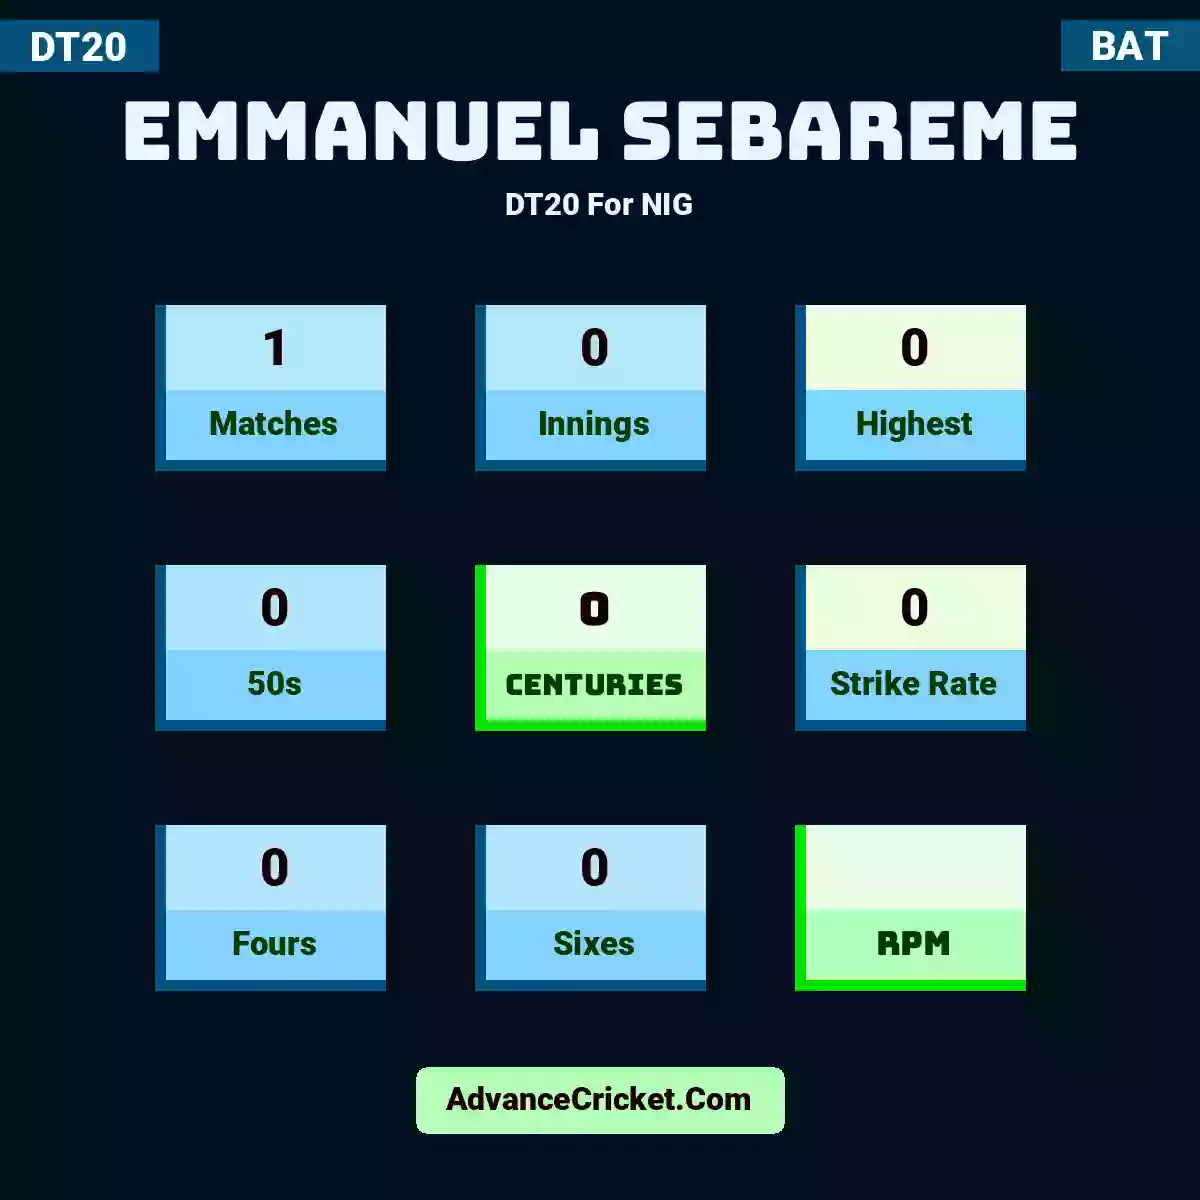 Emmanuel Sebareme DT20  For NIG, Emmanuel Sebareme played 1 matches, scored 0 runs as highest, 0 half-centuries, and 0 centuries, with a strike rate of 0. E.Sebareme hit 0 fours and 0 sixes.